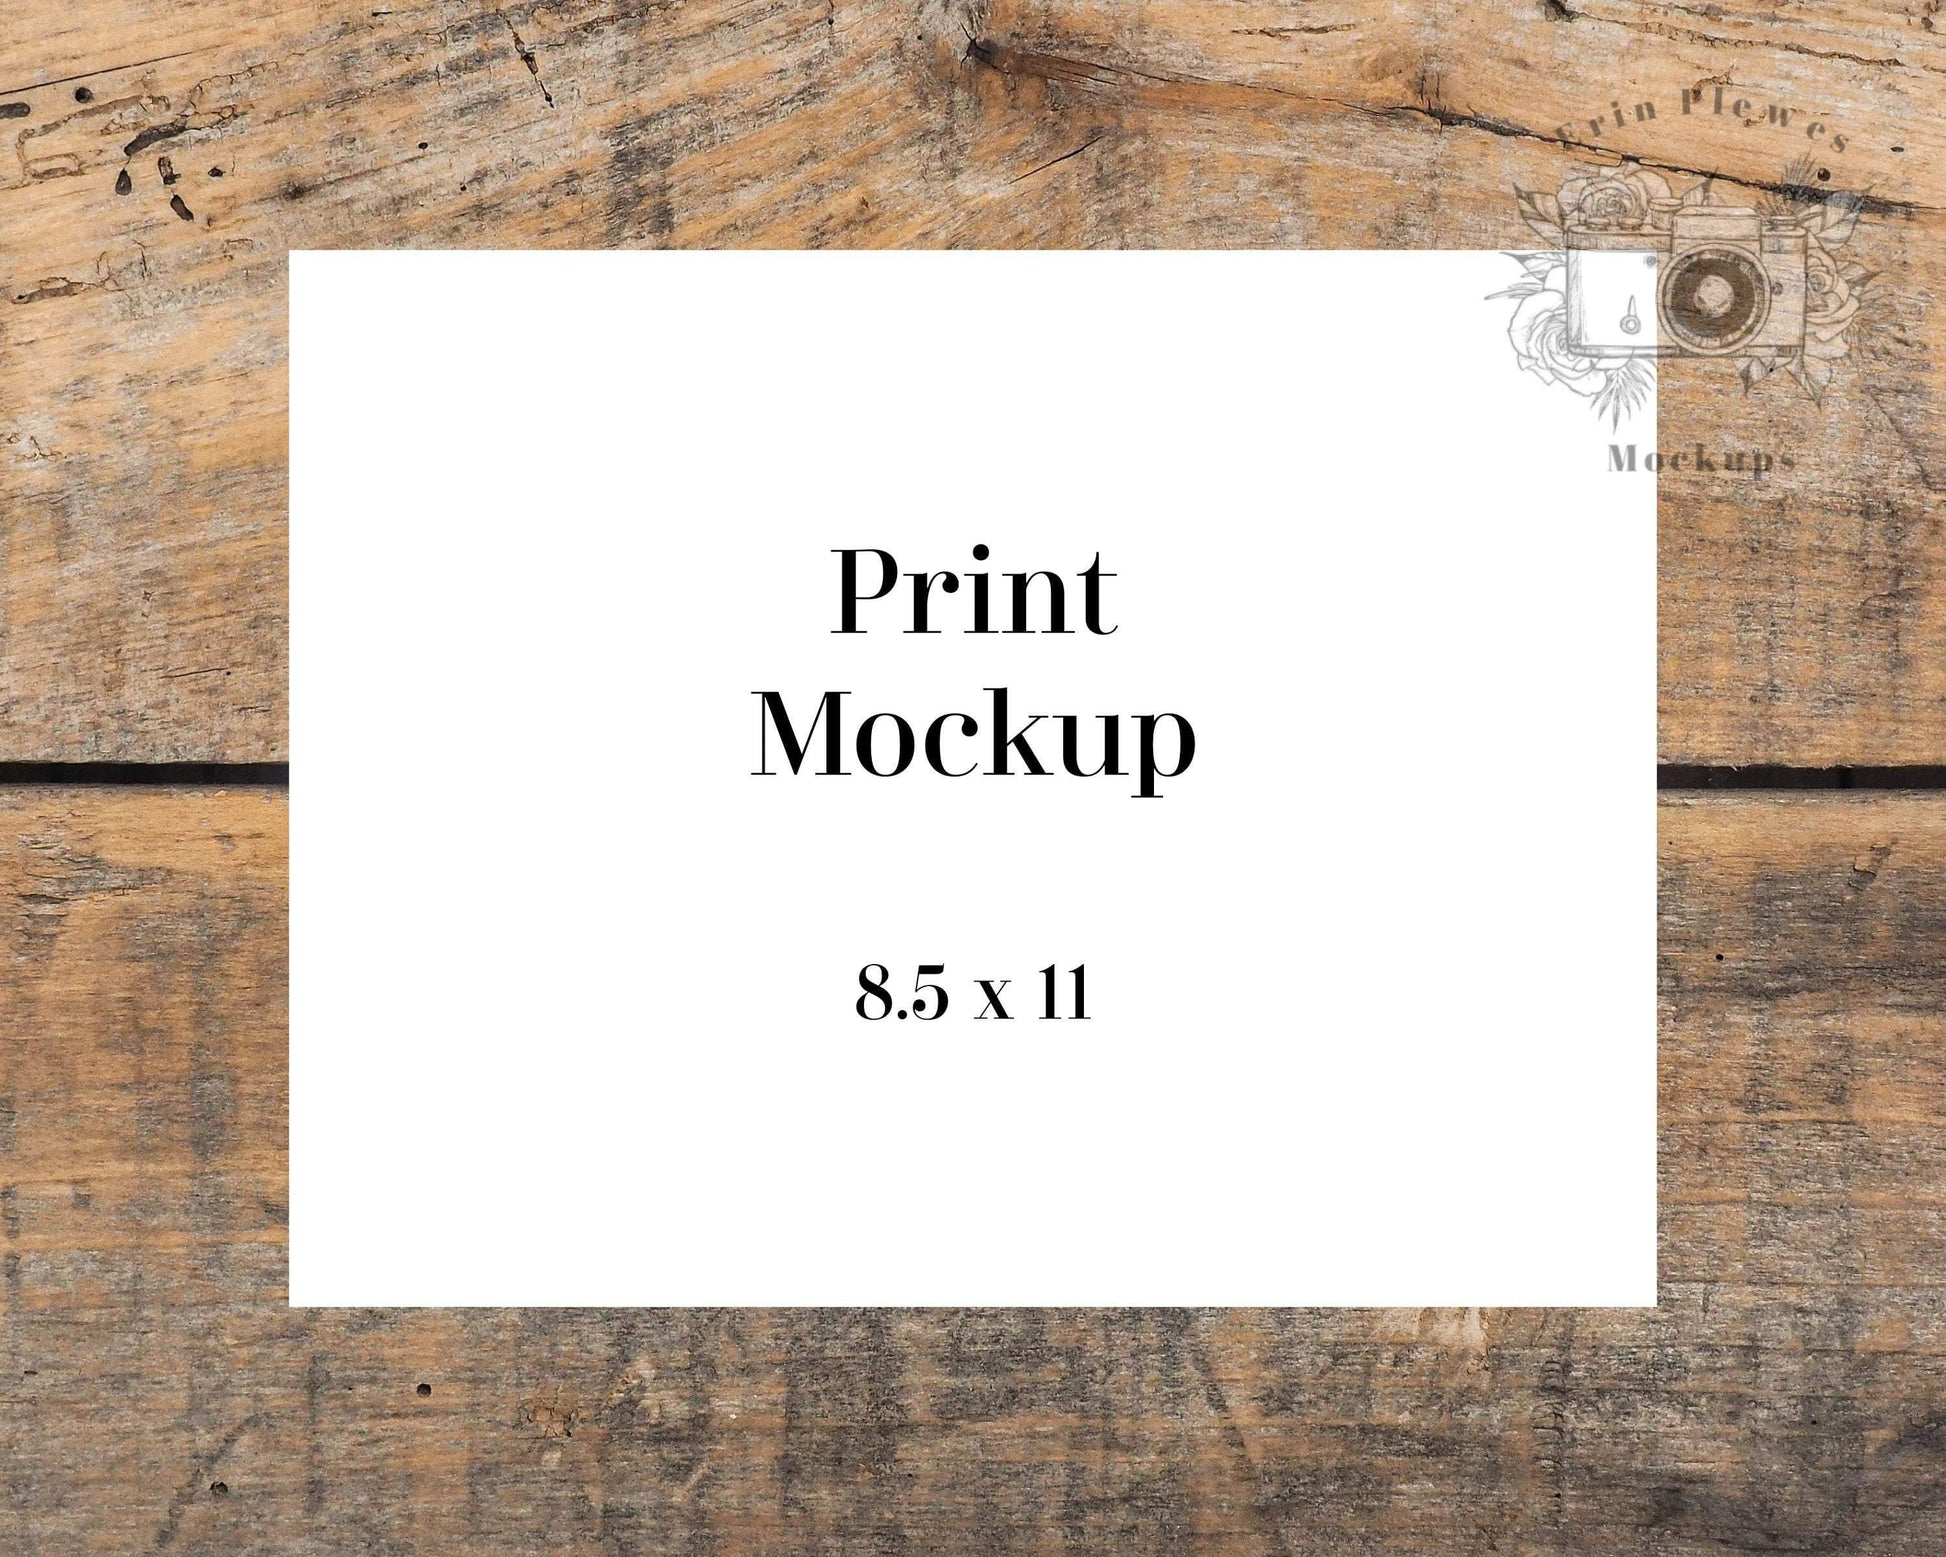 Erin Plewes Mockups 8.5 x 11 Paper Mockup, 8.5x11 Print mockup on brown farmhouse rustic wood, Minimal mock up Jpeg Instant Digital Download